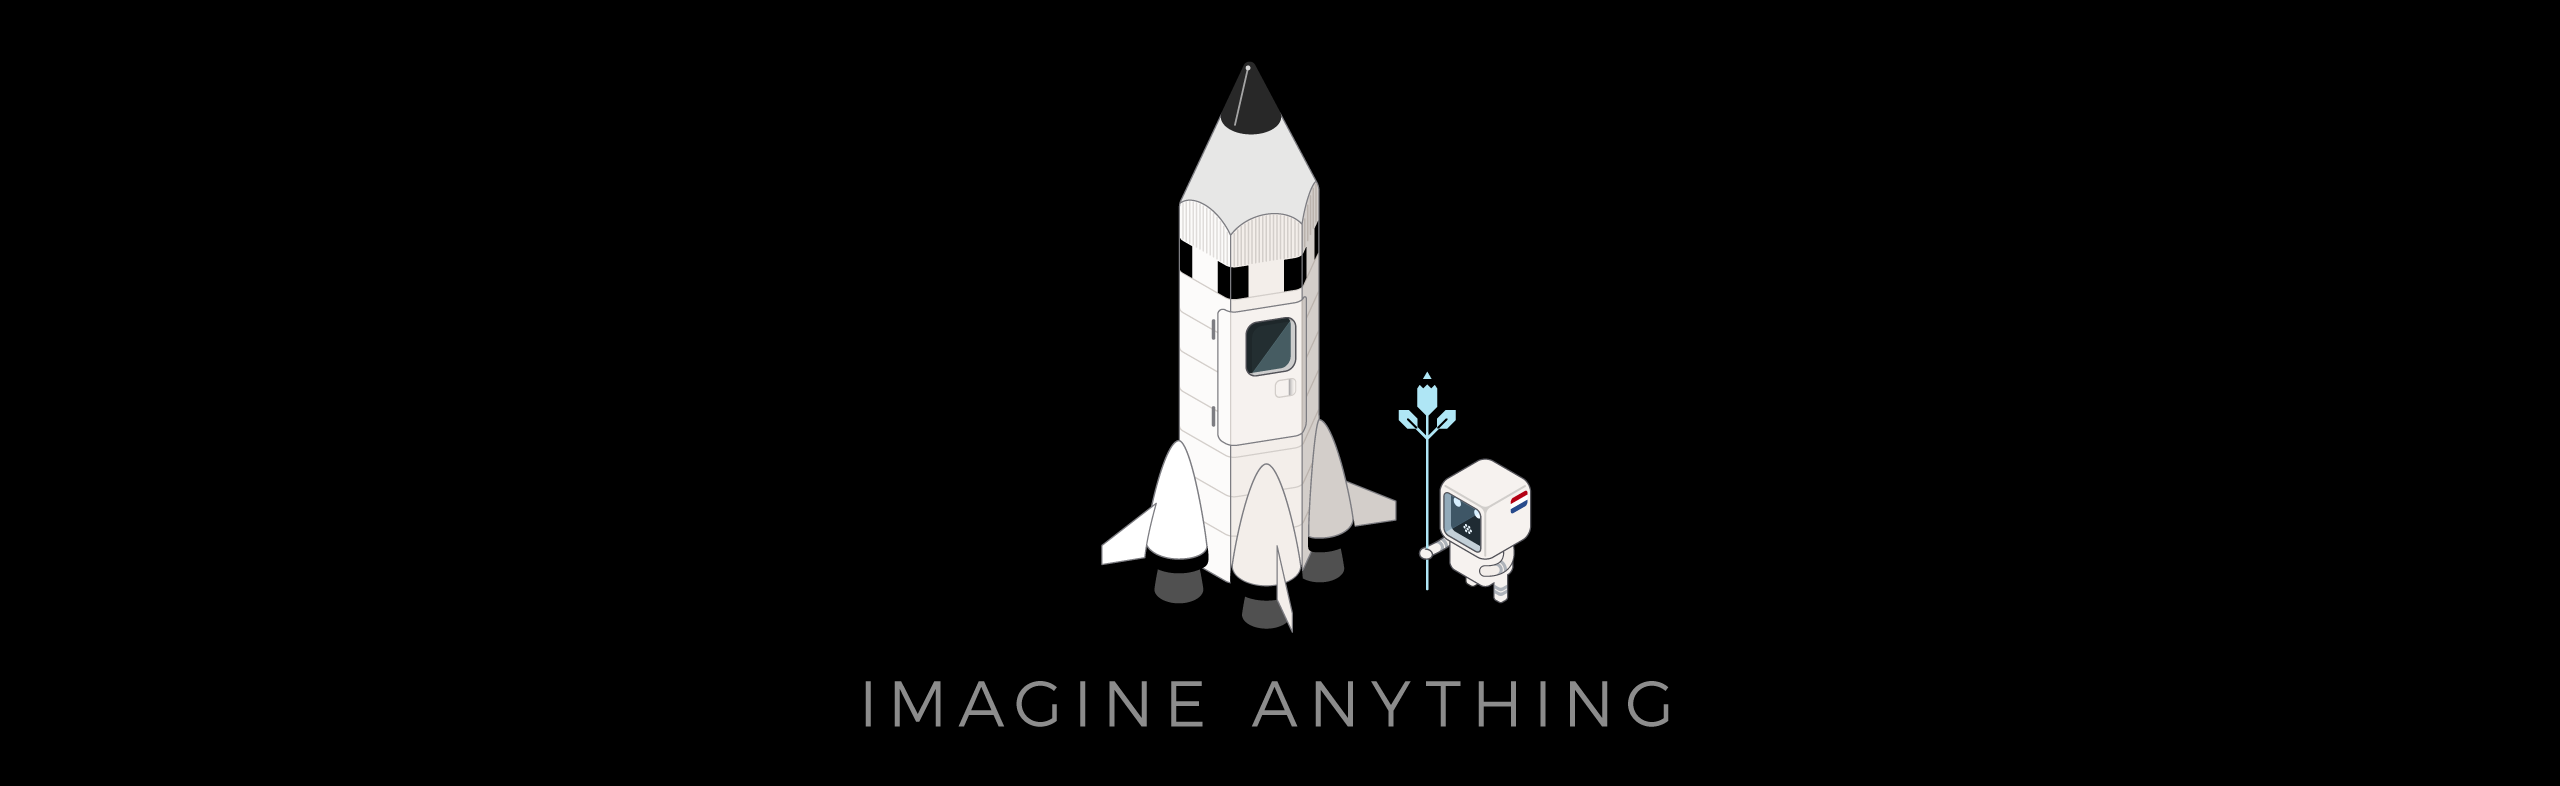 7-Imagine-Anything